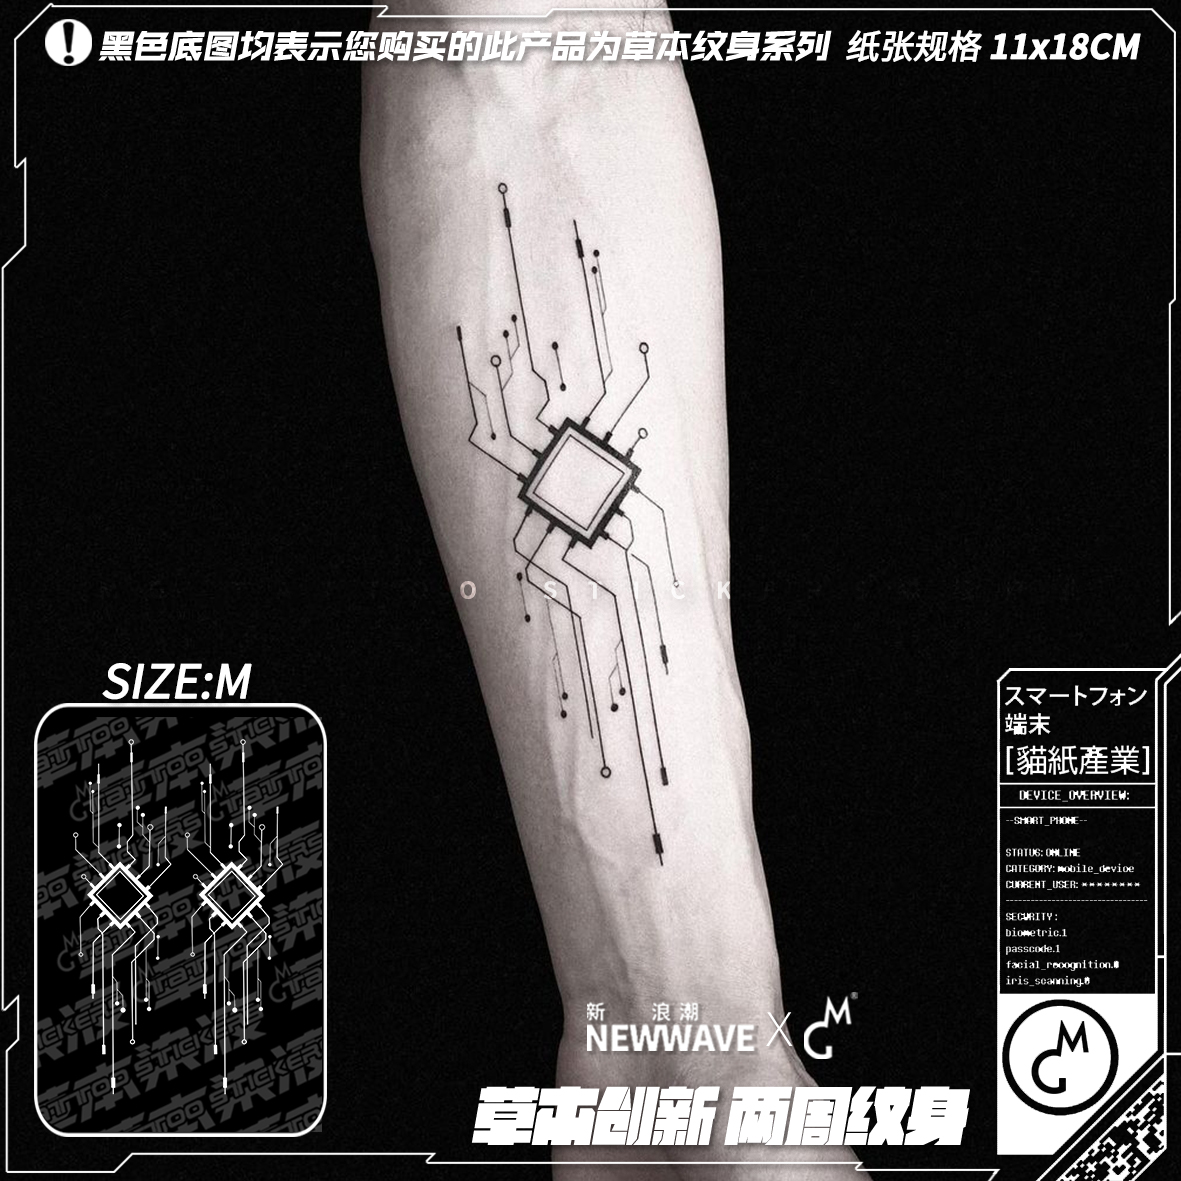 MG tattoo 草本染液 赛博朋克人工智能电路板图案草本持久纹身贴